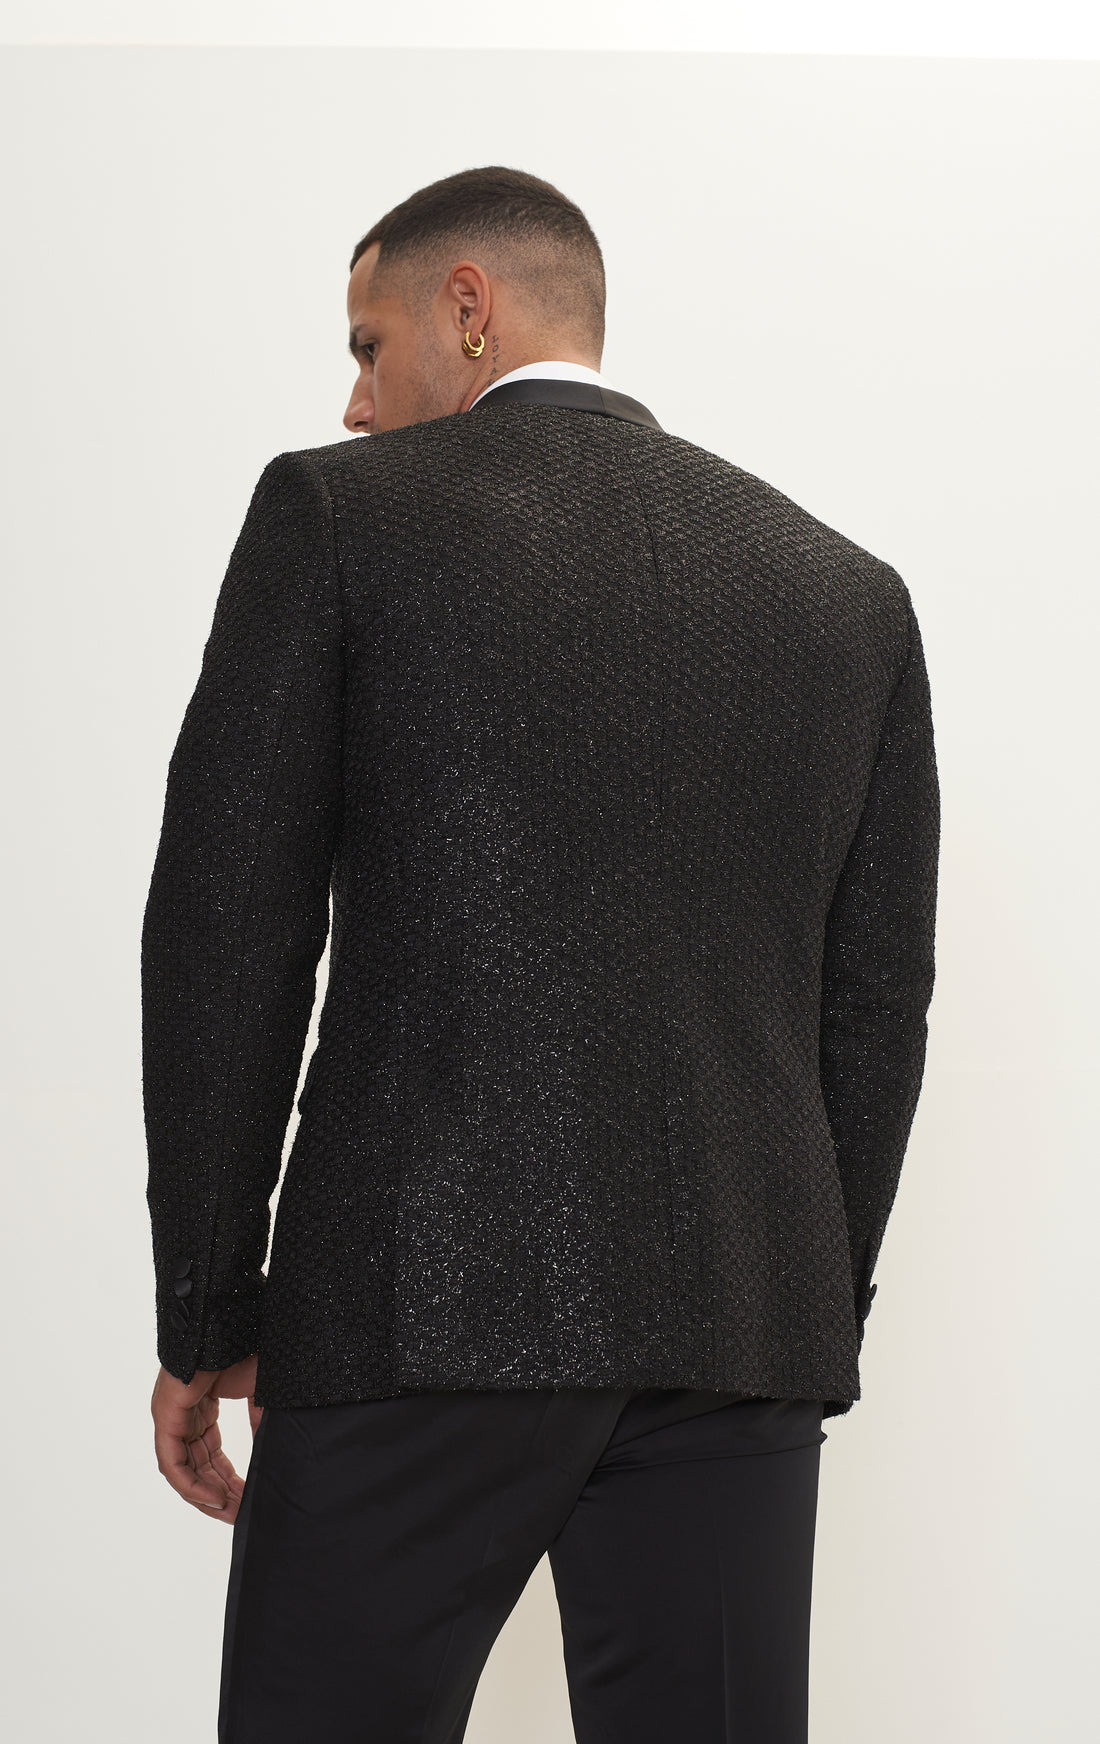 Metallic Honeycomb Weave Shawl Lapel Tuxedo Jacket - Silver Black